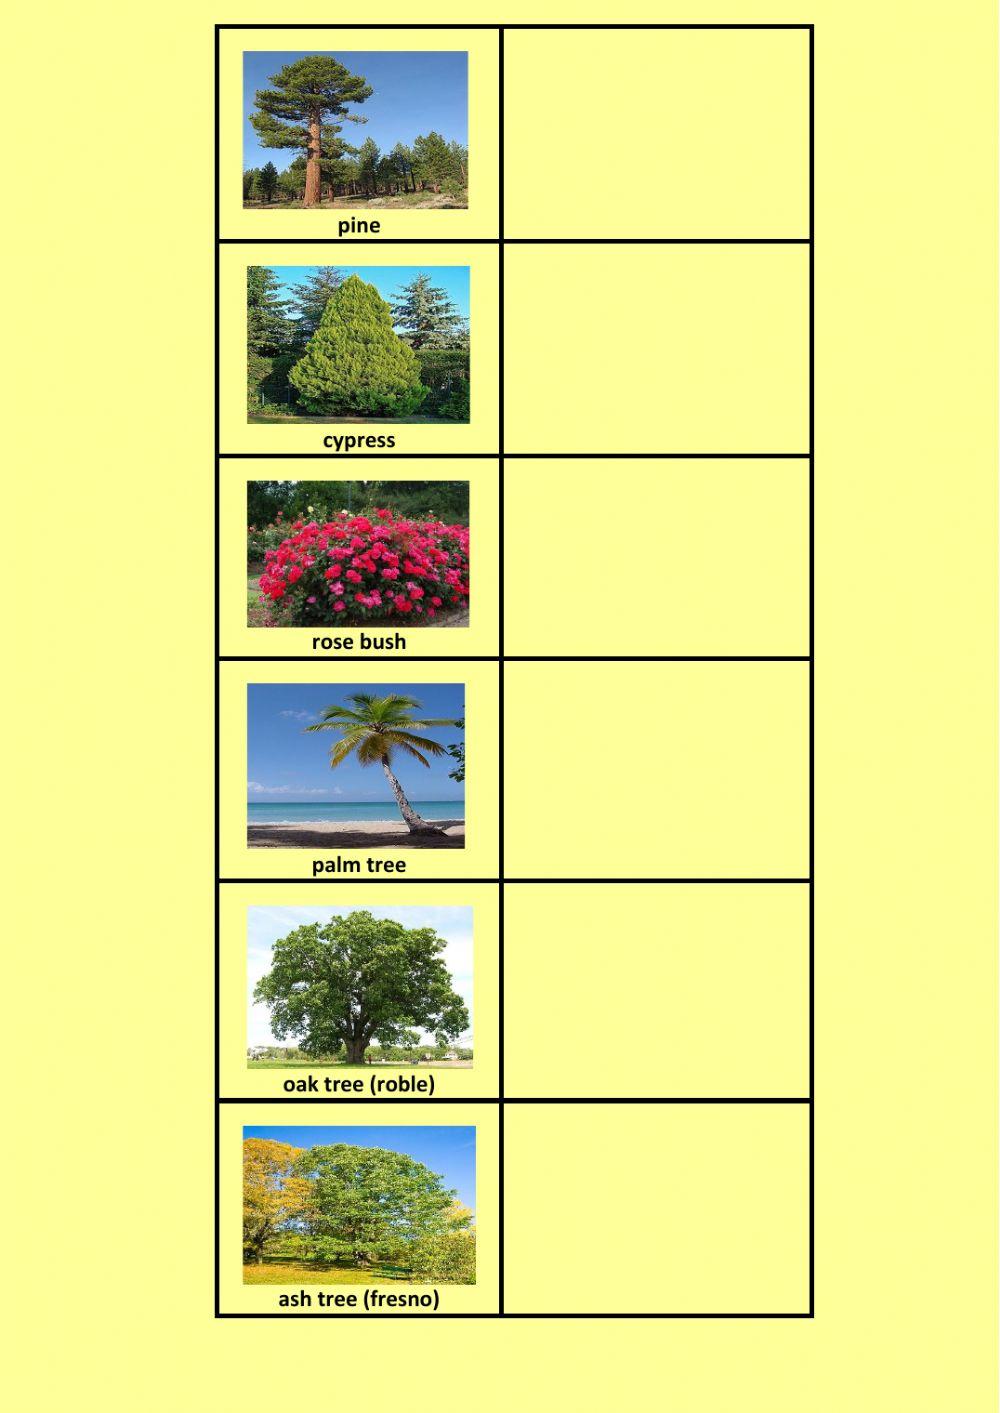 Classify plants